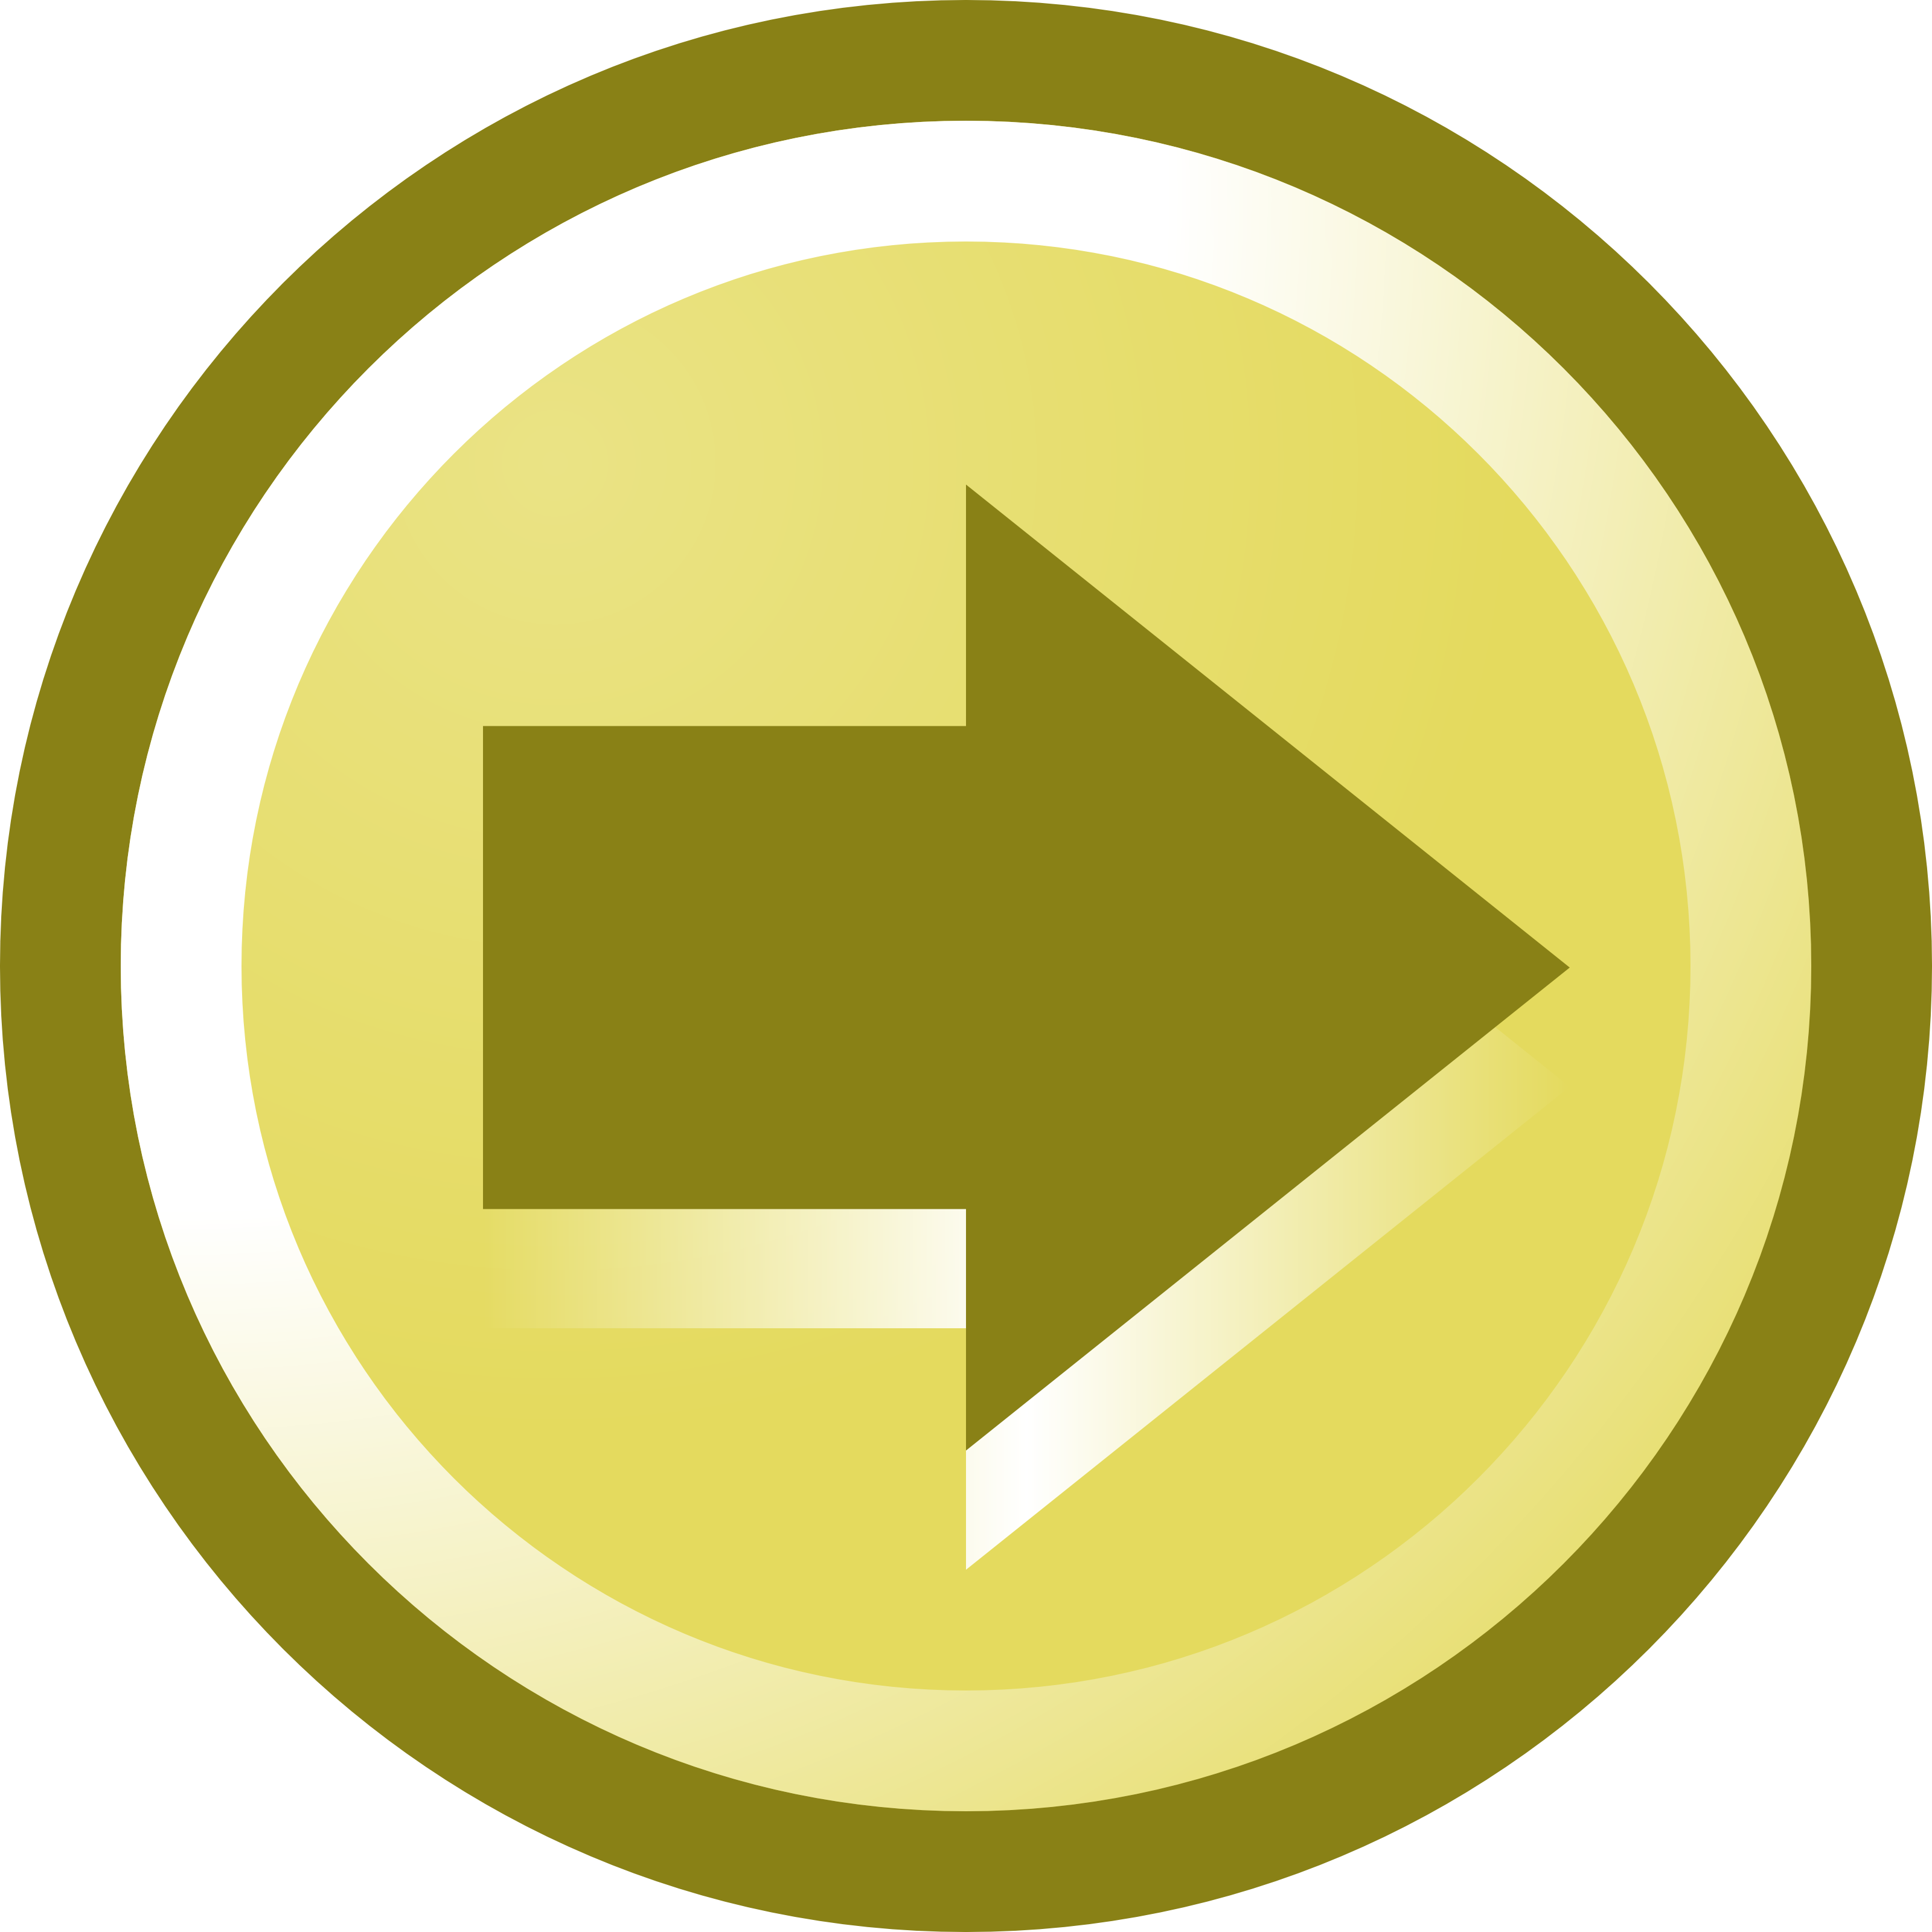 Free Vector Illustration Of A Right Arrow Icon - Arrow Icon (3200x3200)